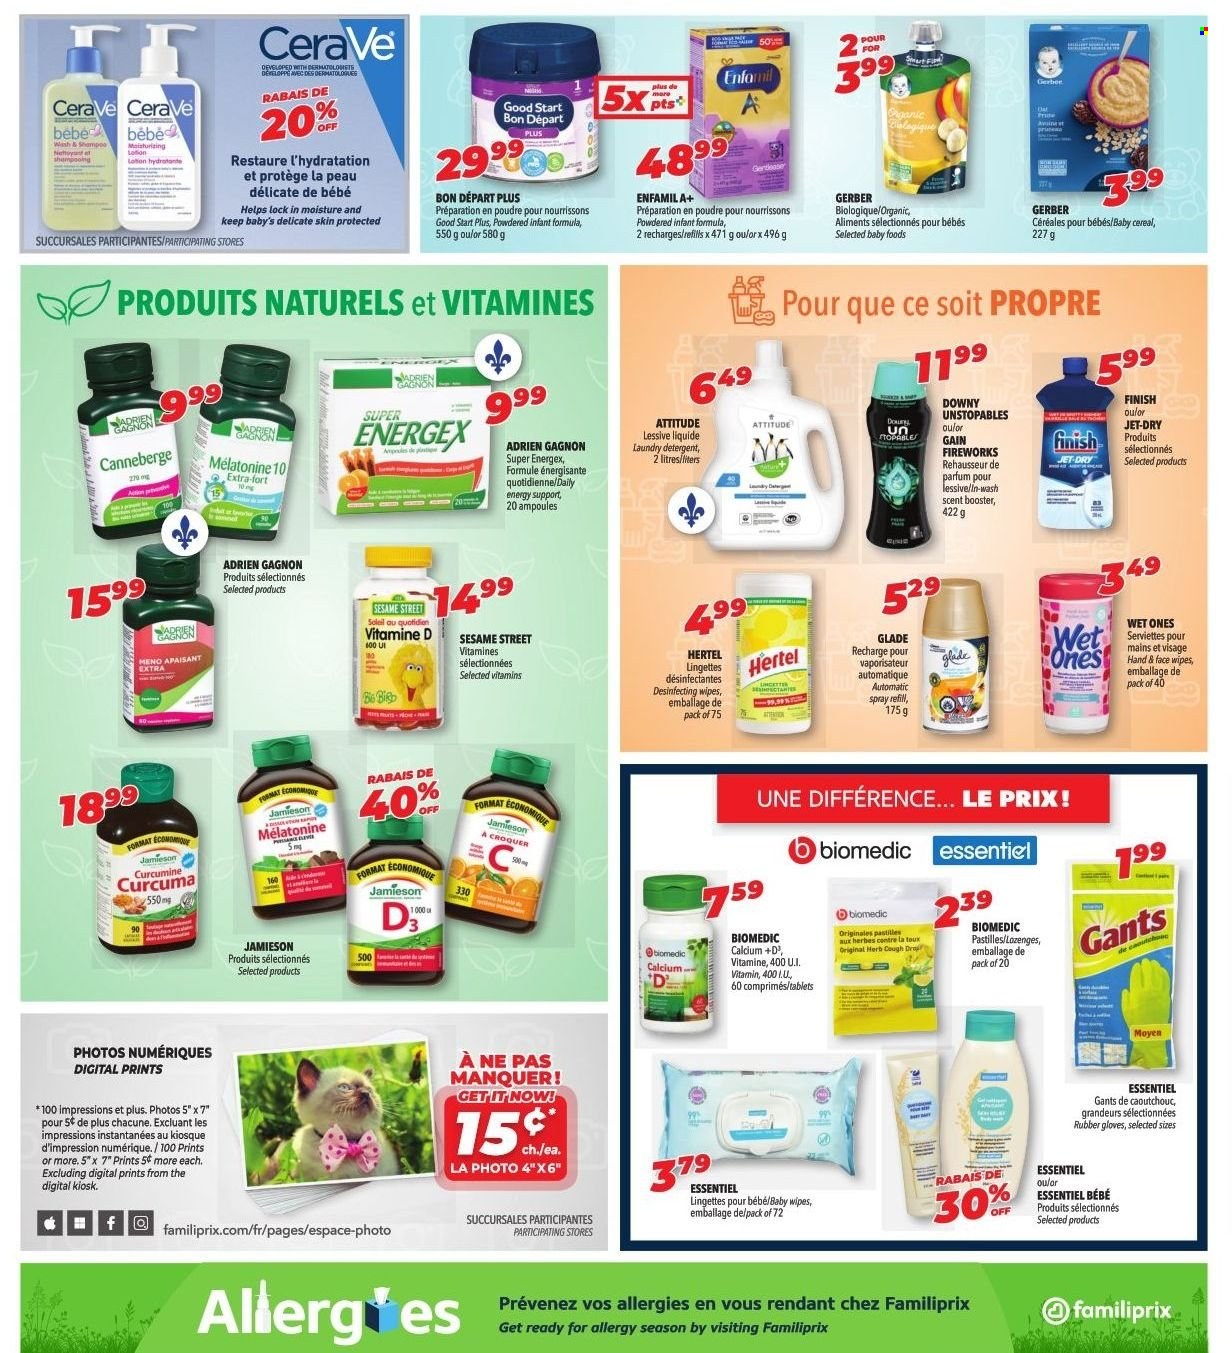 thumbnail - Familiprix Flyer - May 19, 2022 - May 25, 2022 - Sales products - pastilles, Sesame Street, Gerber, cereals, herbs, wipes, baby wipes, Gain, Unstopables, laundry detergent, Gain Fireworks, Jet, CeraVe, eau de parfum, gloves, calcium, detergent. Page 7.